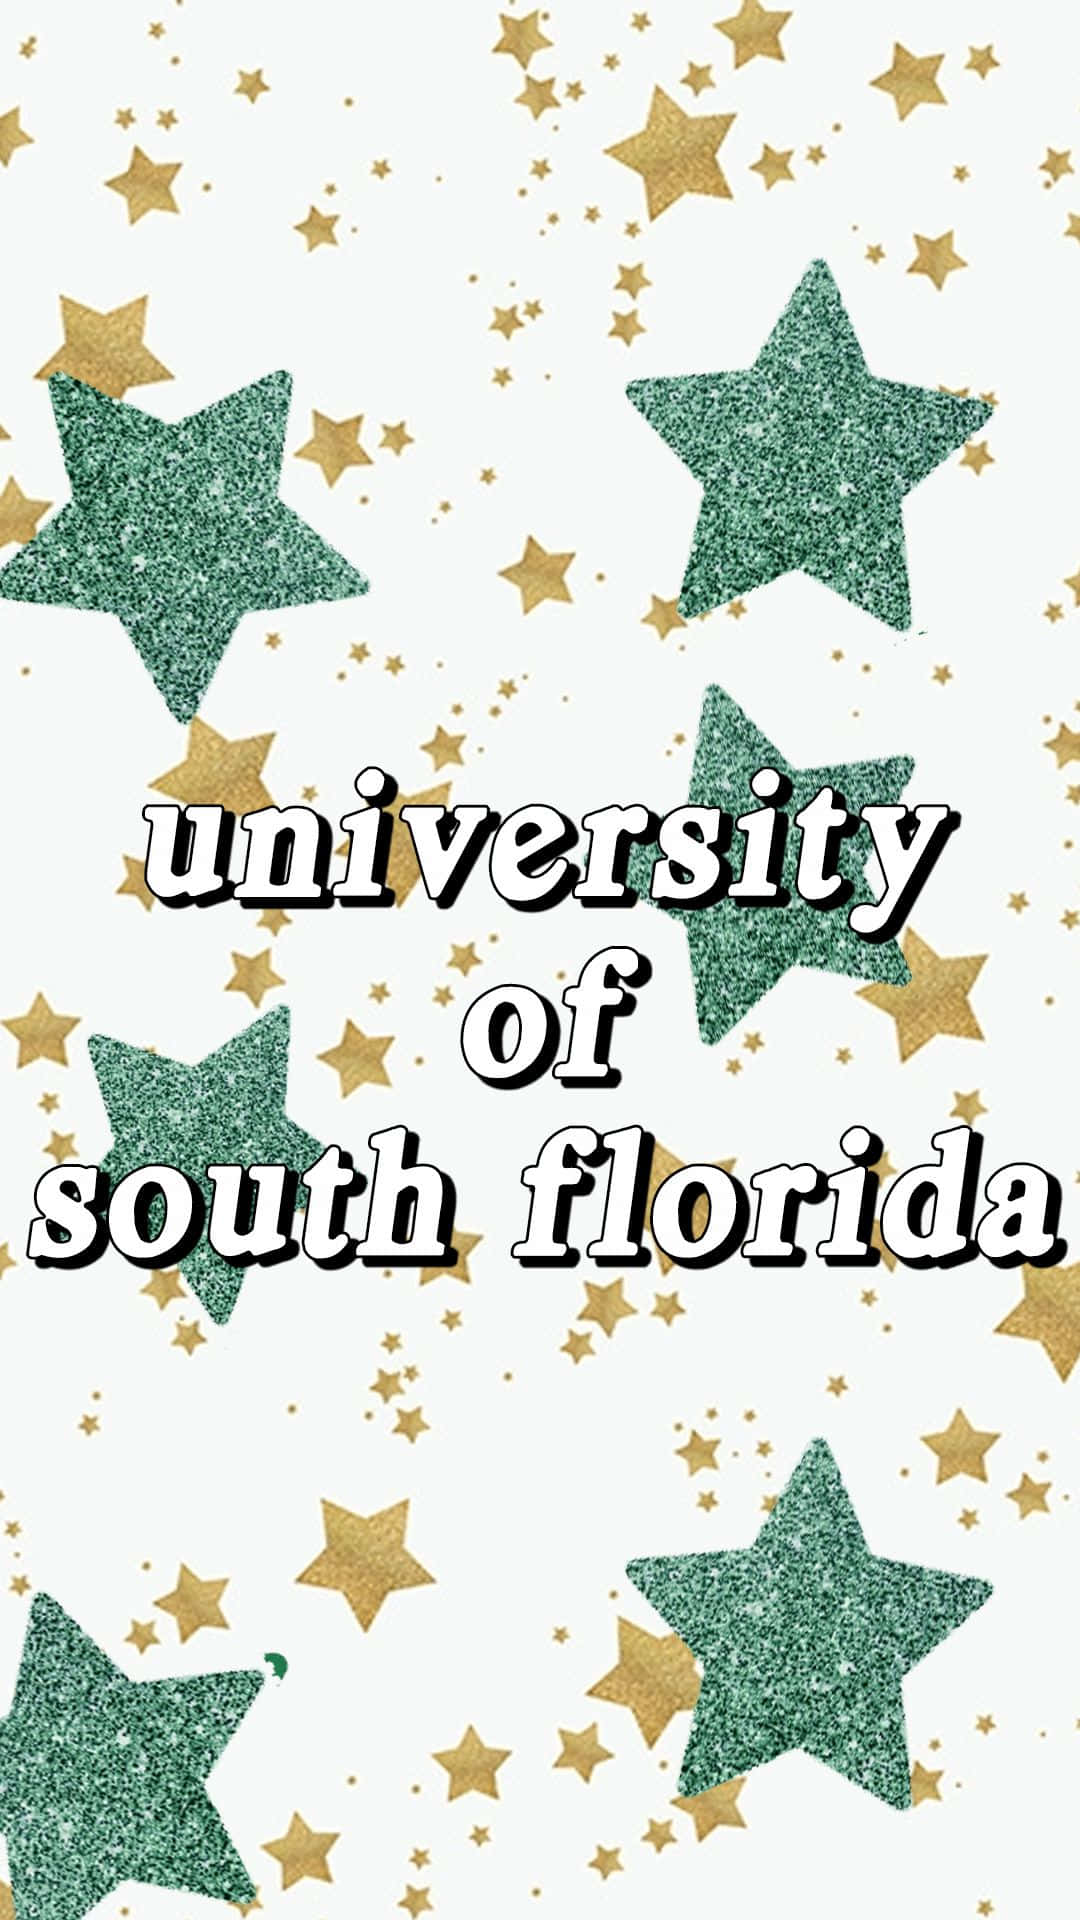 University of South Florida Campus illuminated under the stars Wallpaper